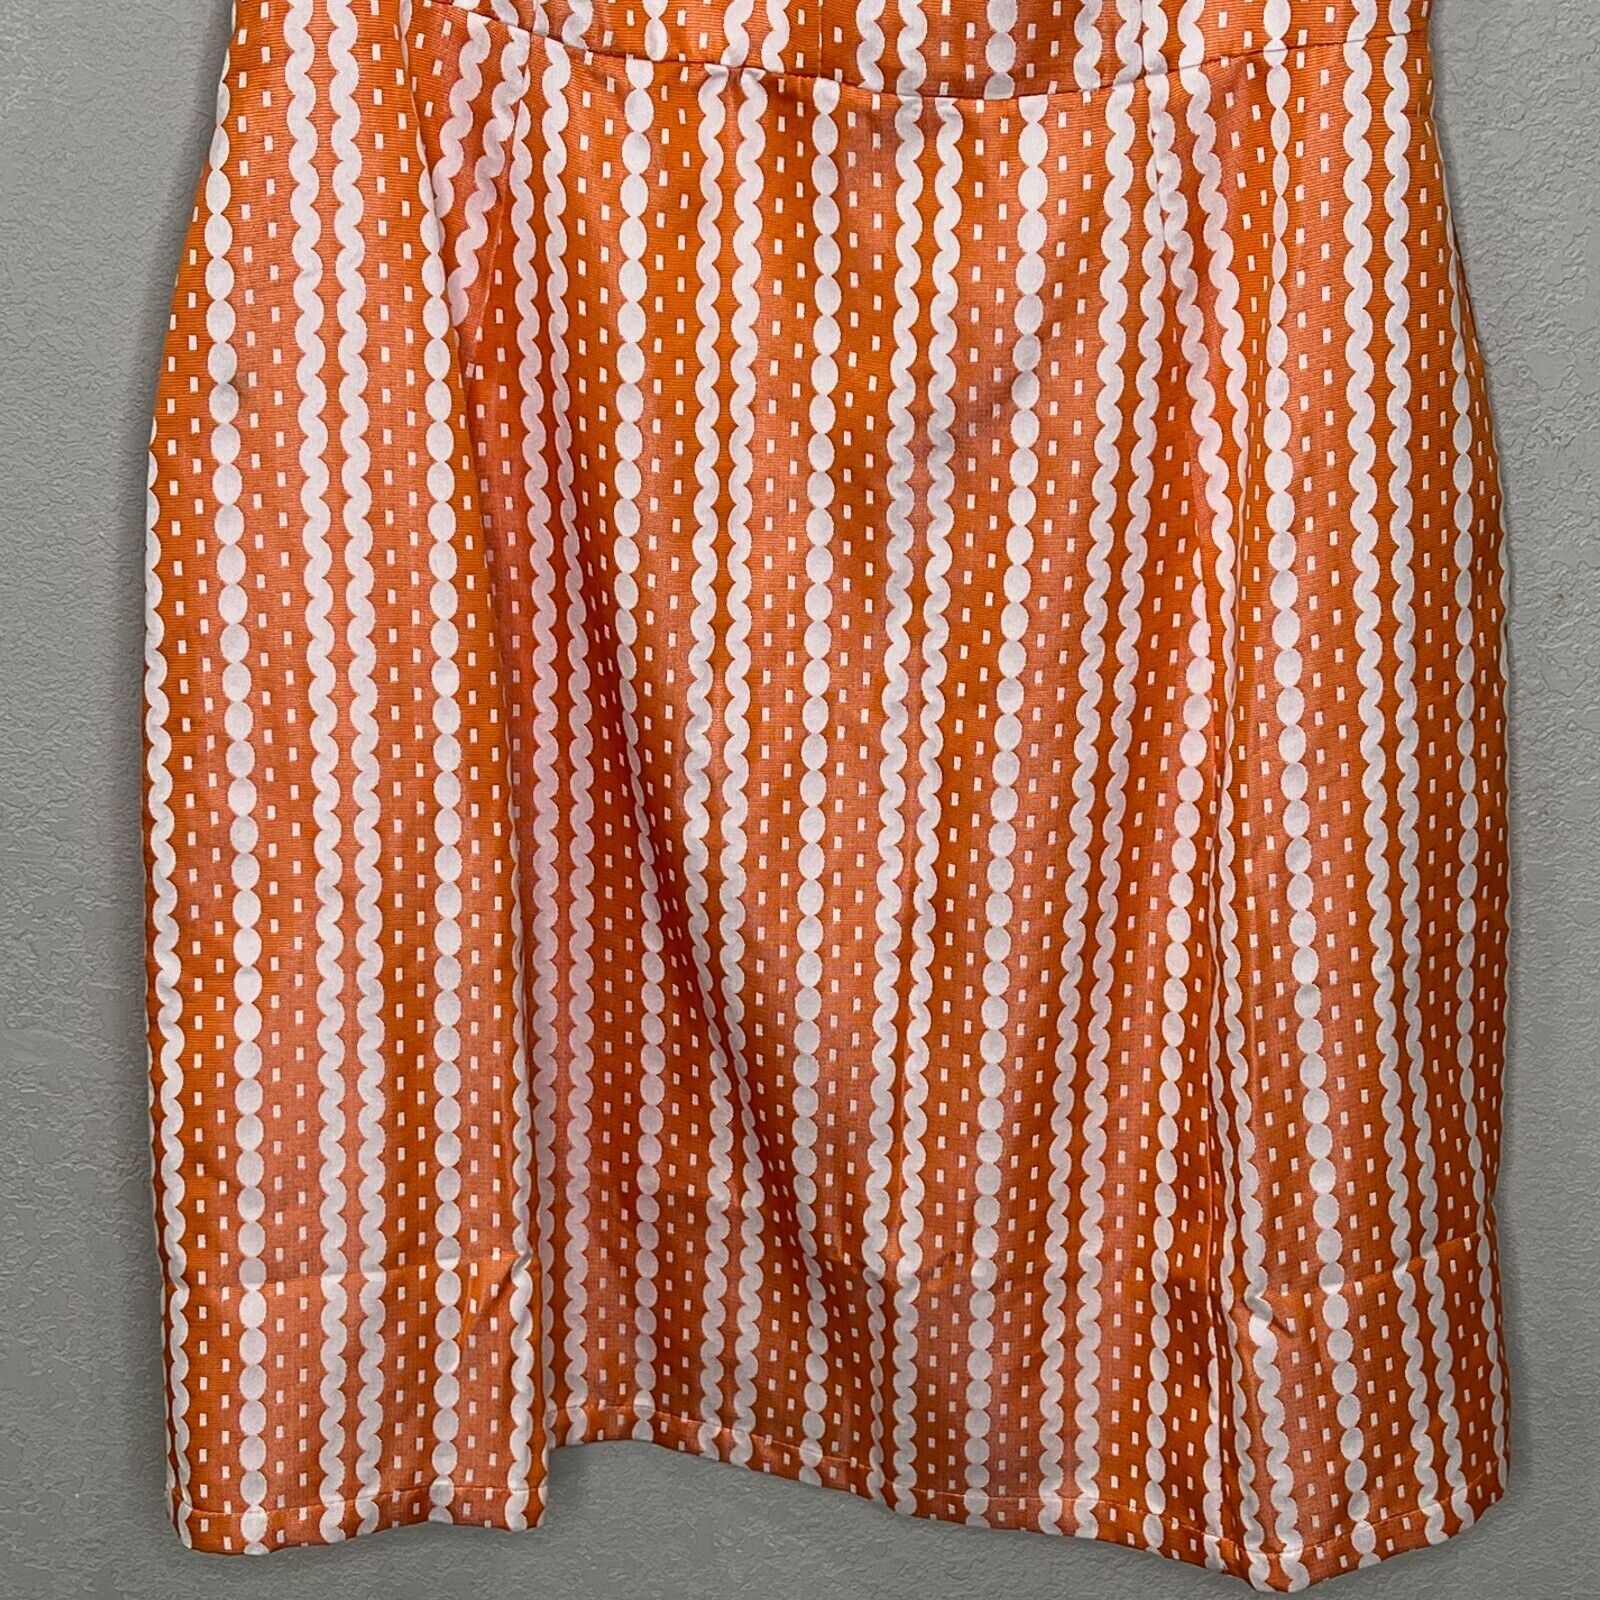 Julie Brown New York Orange White Lined Sleeveless Dress Pockets Size 10